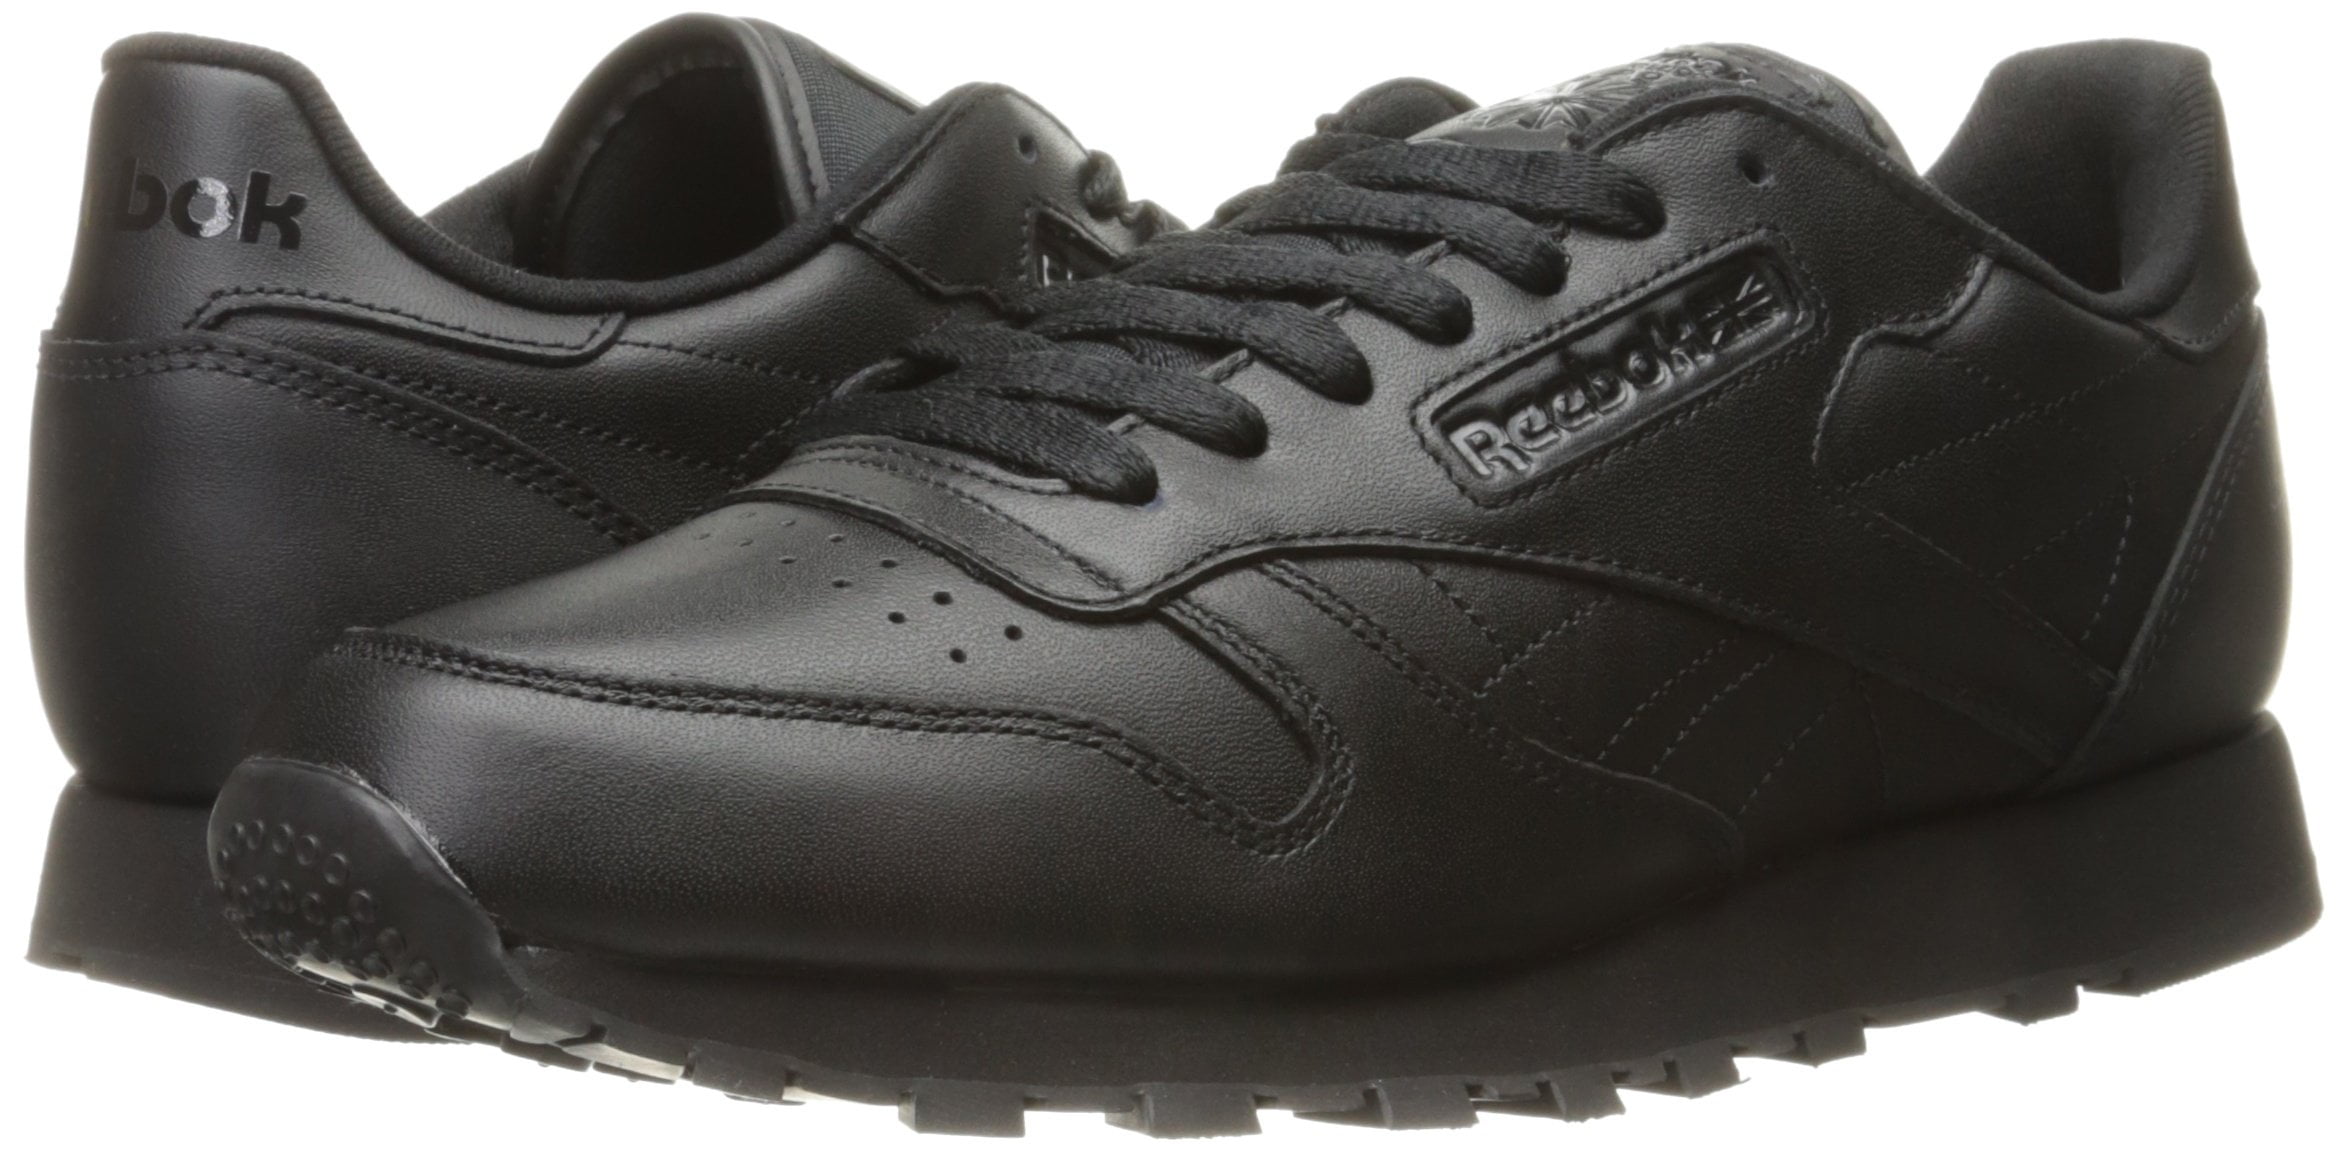 reebok j90119 men's classic leather running shoes